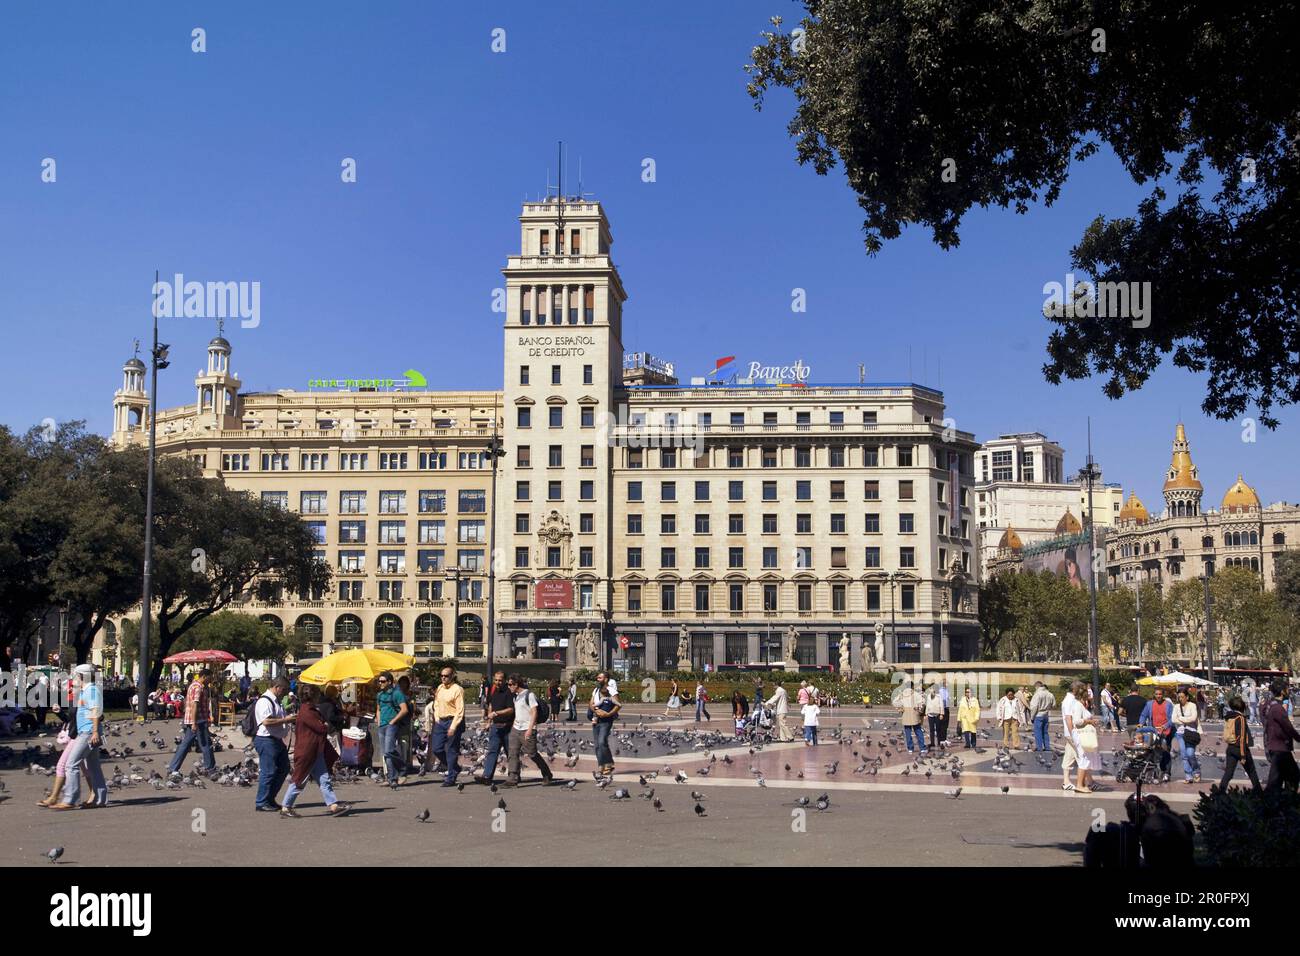 Spanien,Barcelona,Plaza de Catalunya,background Banco Espanol de Credito Stock Photo